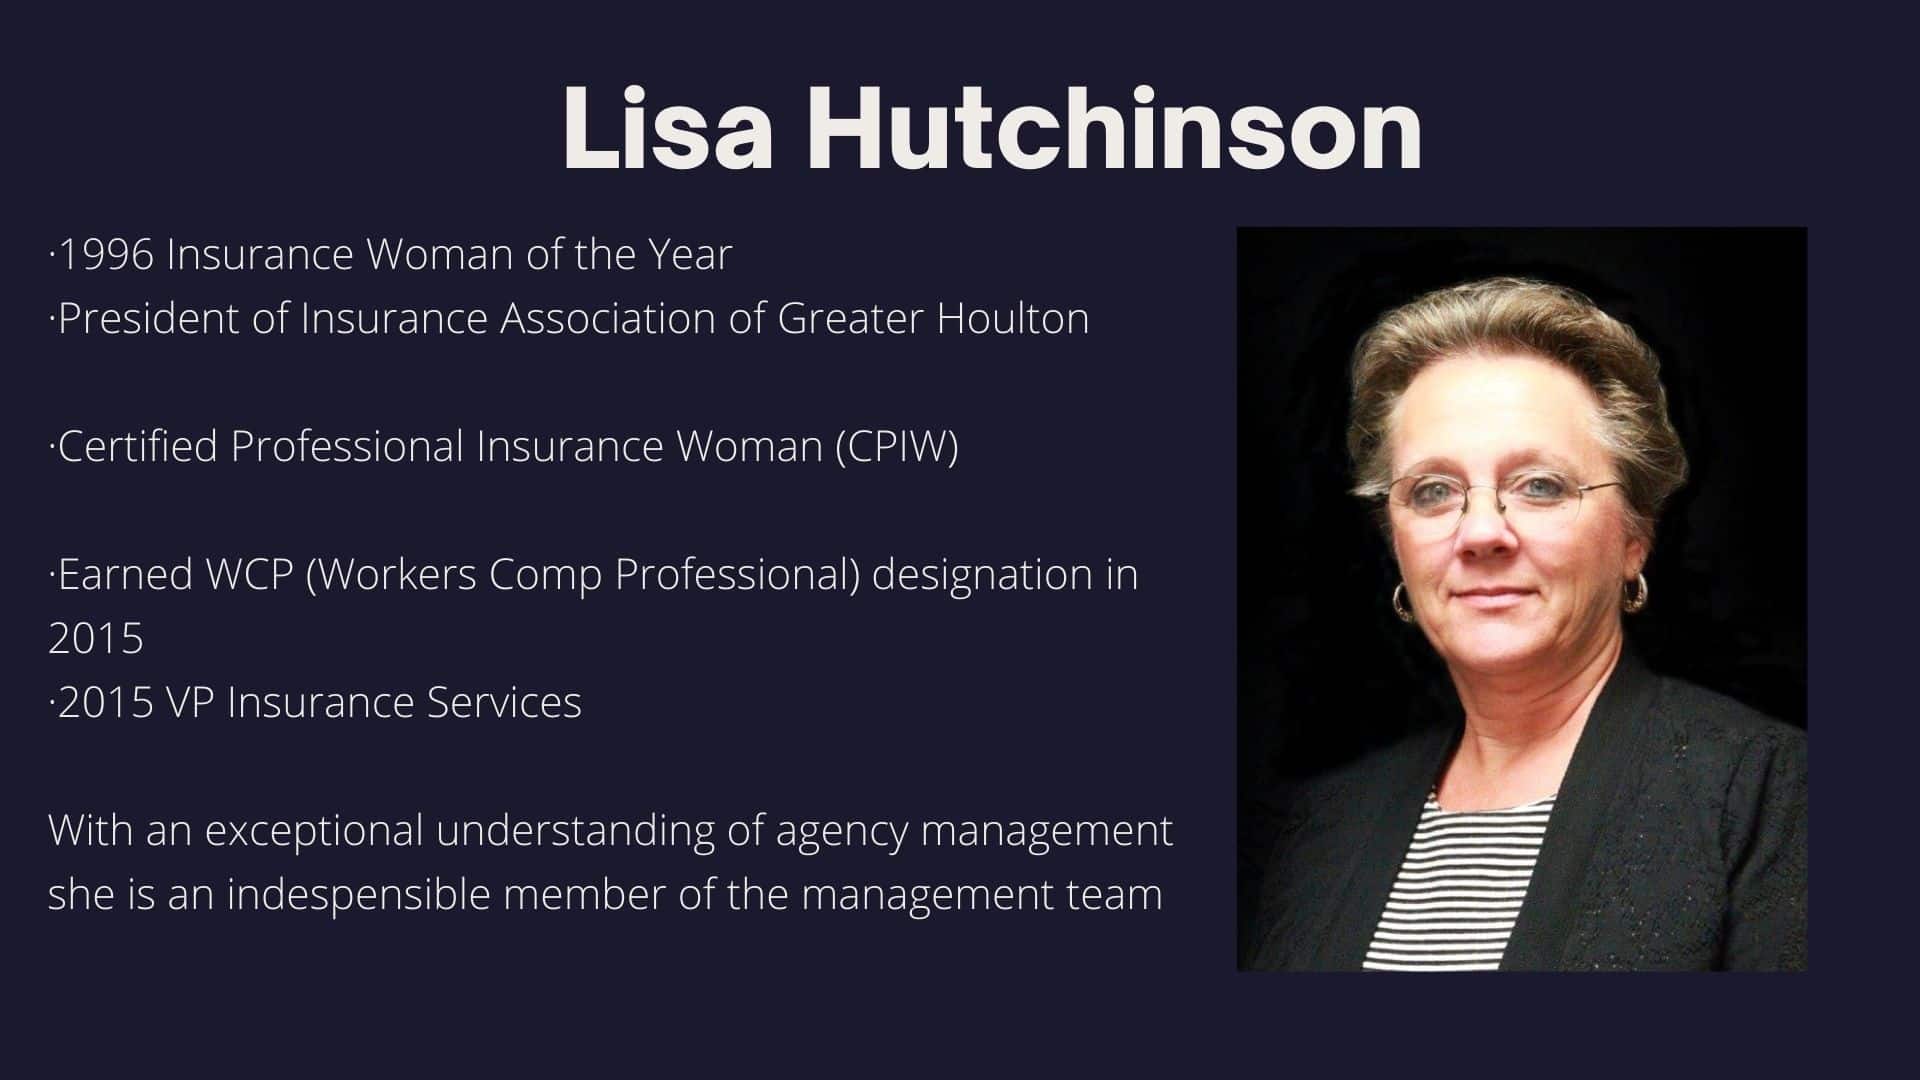 Lisa Hutchinson 30 years